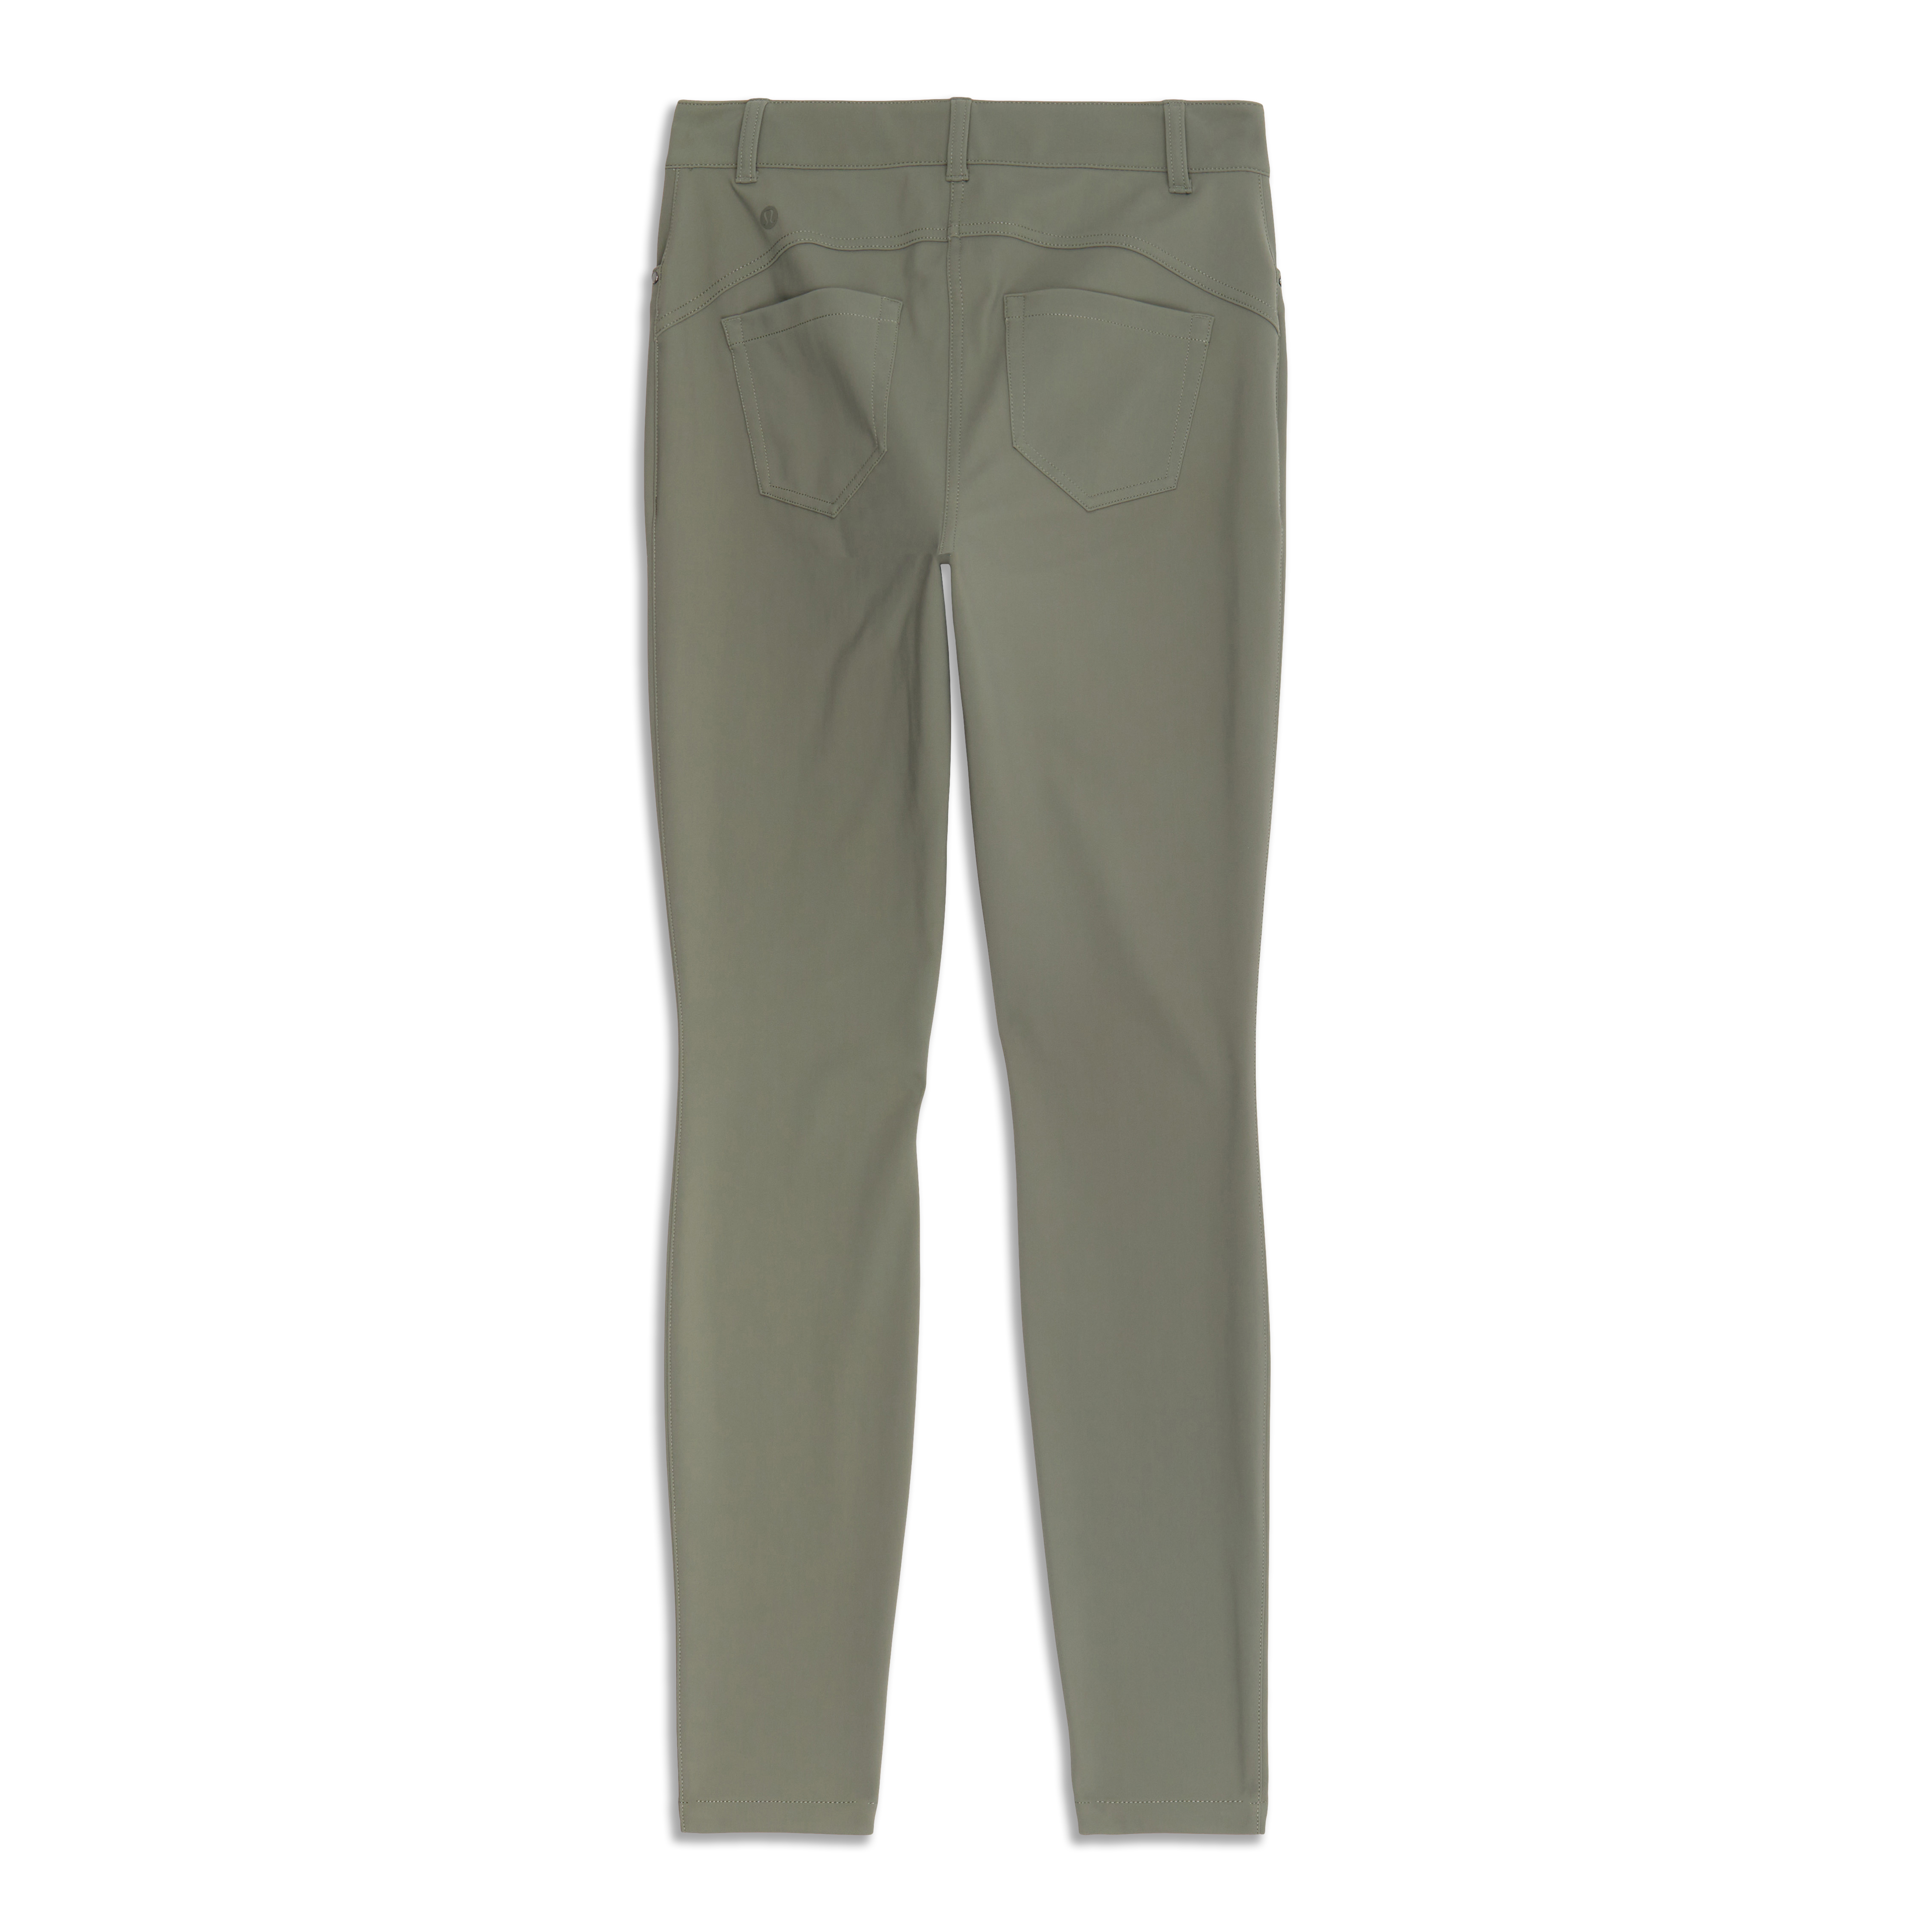 Lululemon City Sleek 5 Pocket 7/8 Pant Rhino Grey 6 Gray - $75 (41% Off  Retail) - From Lauren